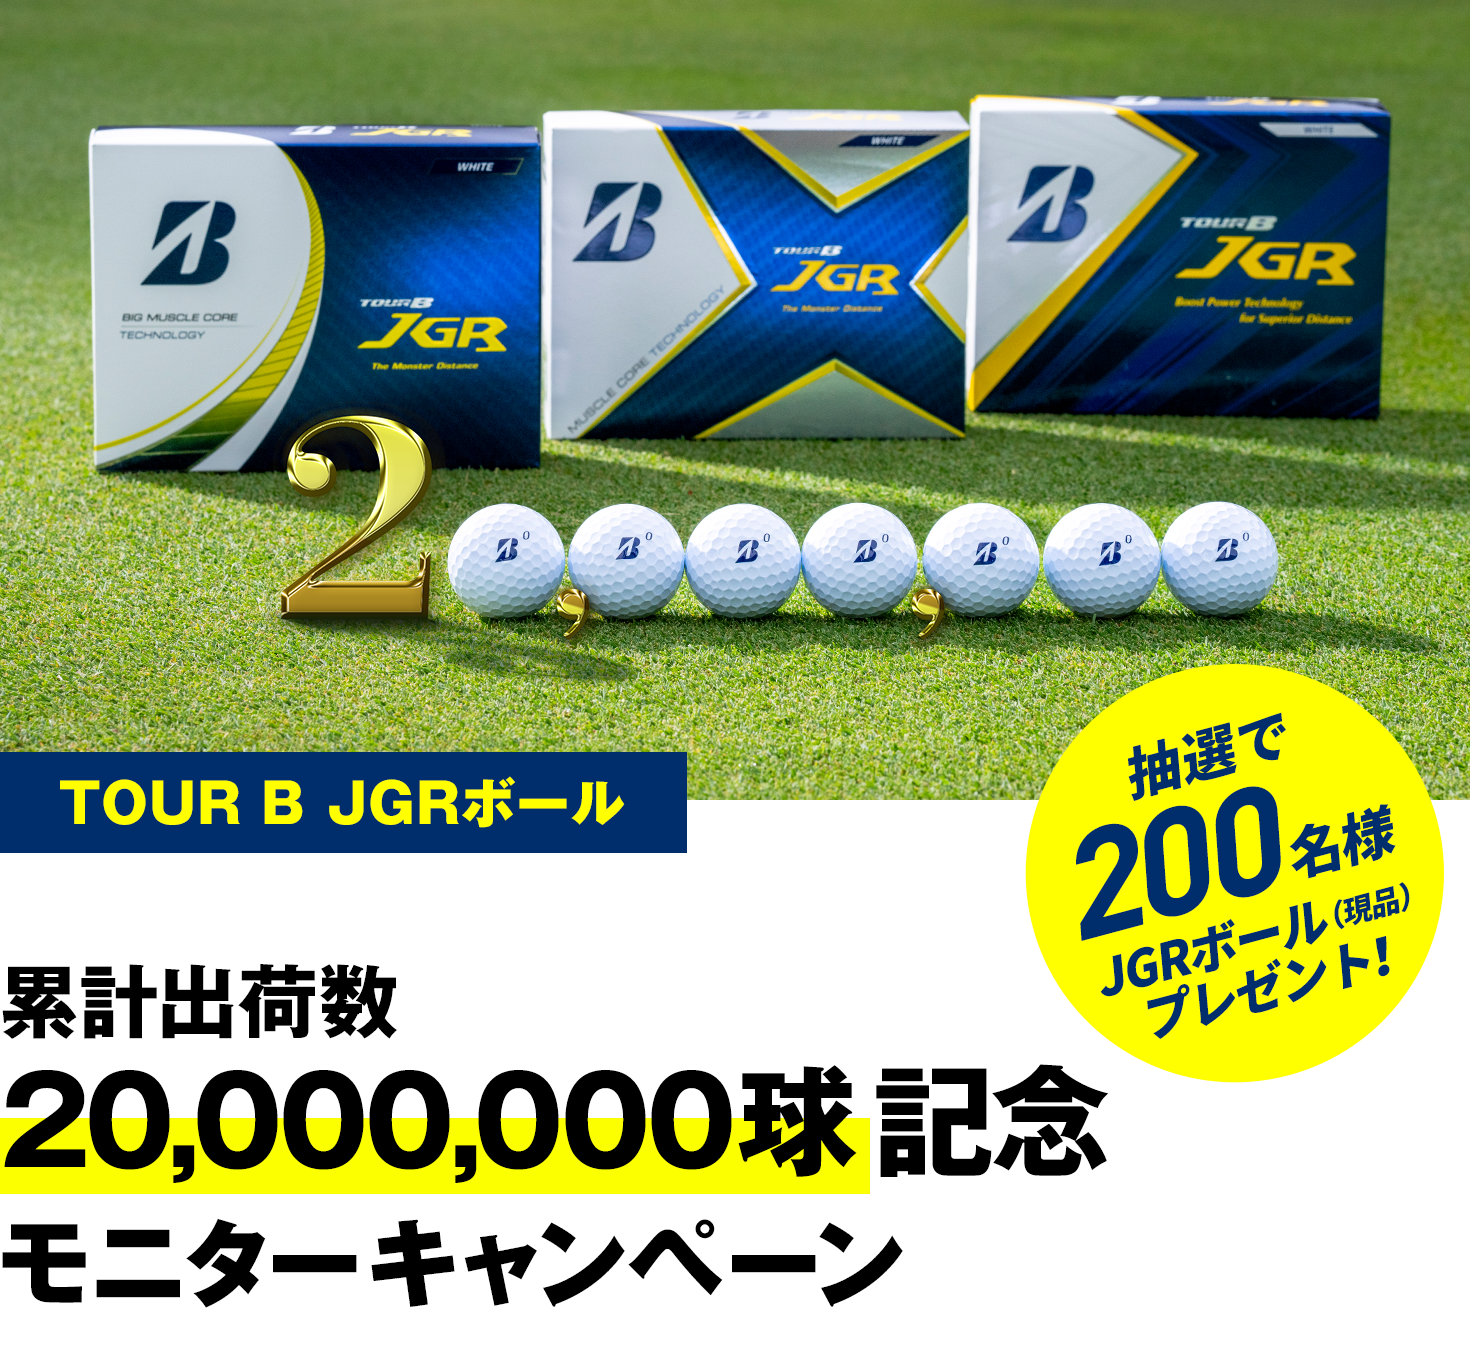 TOUR B JGRボール 累計出荷数20,000,000球記念 モニターキャンペーン